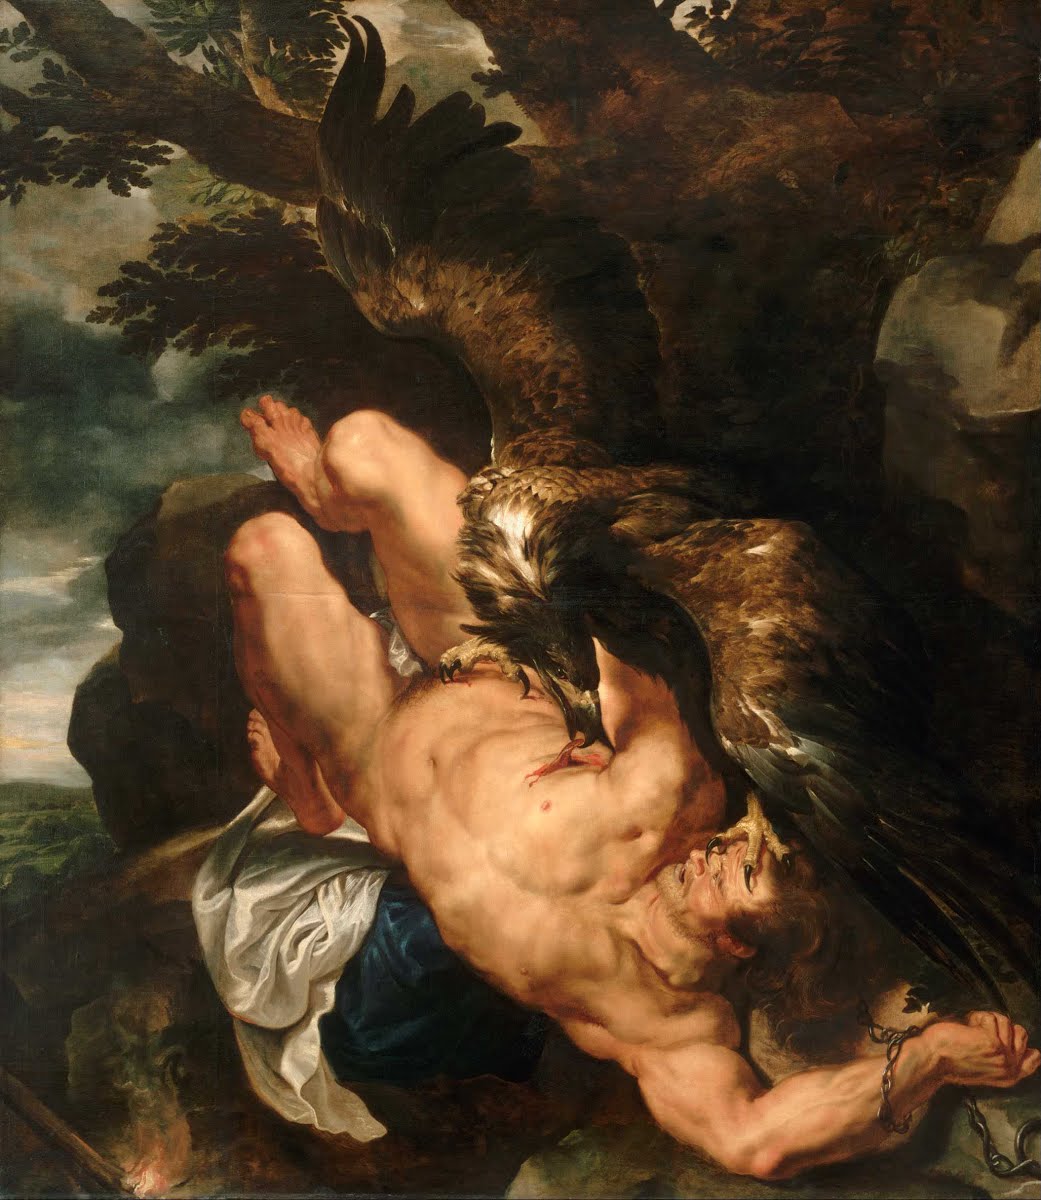 Prometeu Acorrentado by Peter Paul Rubens - 1611-12 